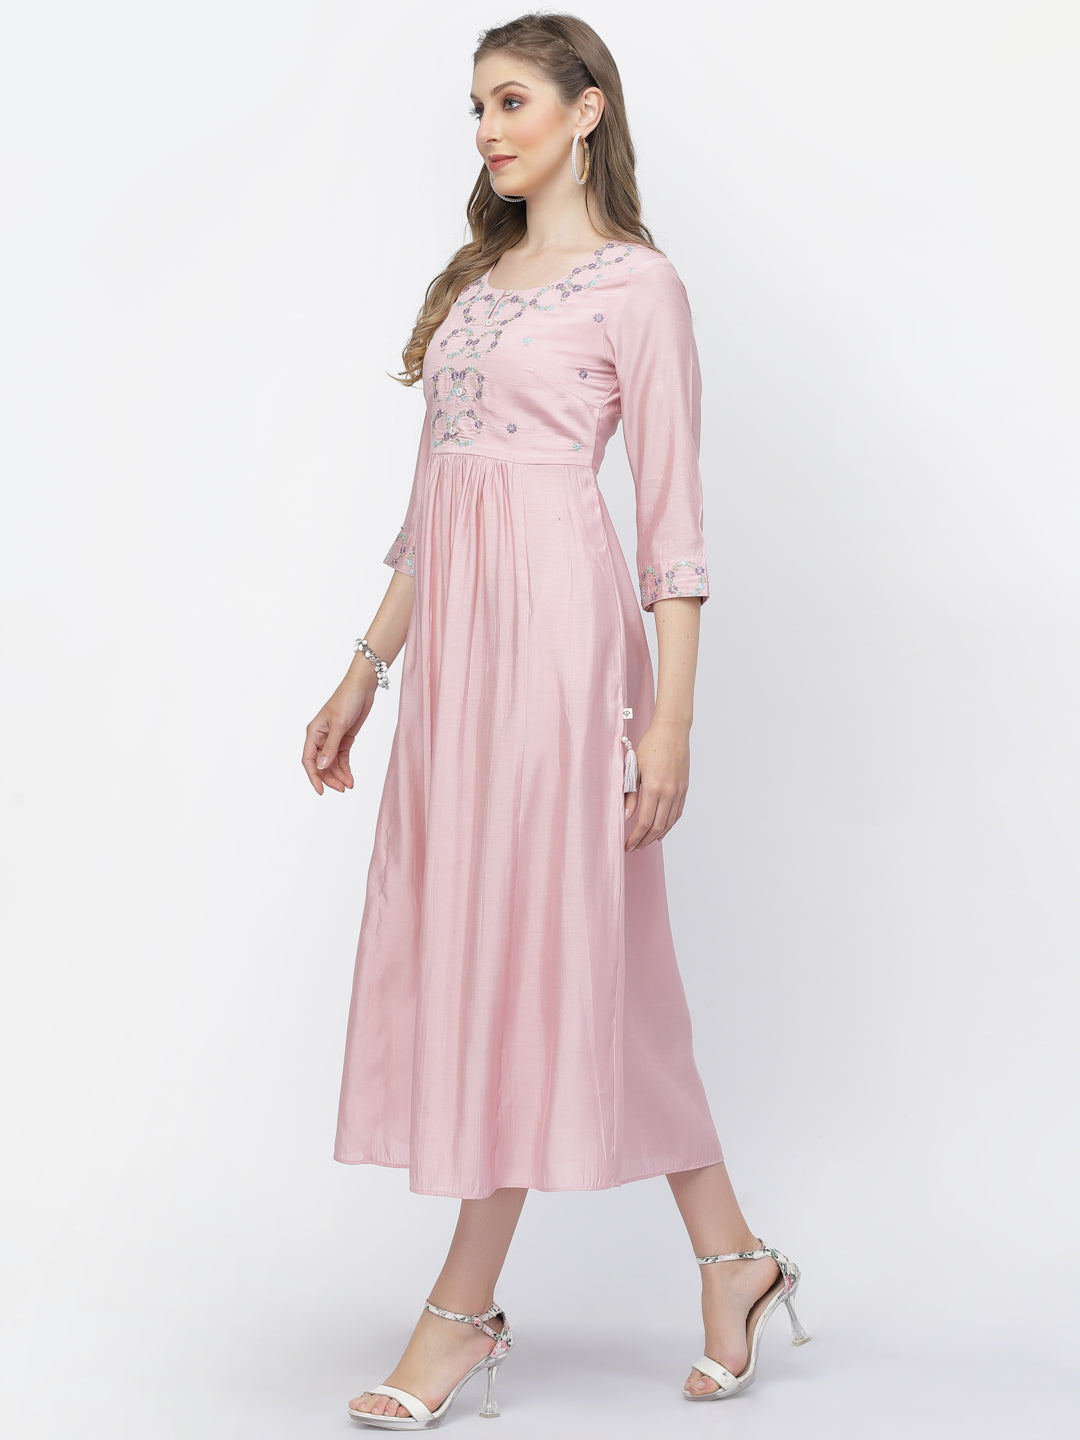 Oyster Pink Chanderi Silk Embroidered Summer Dress - ARH1371